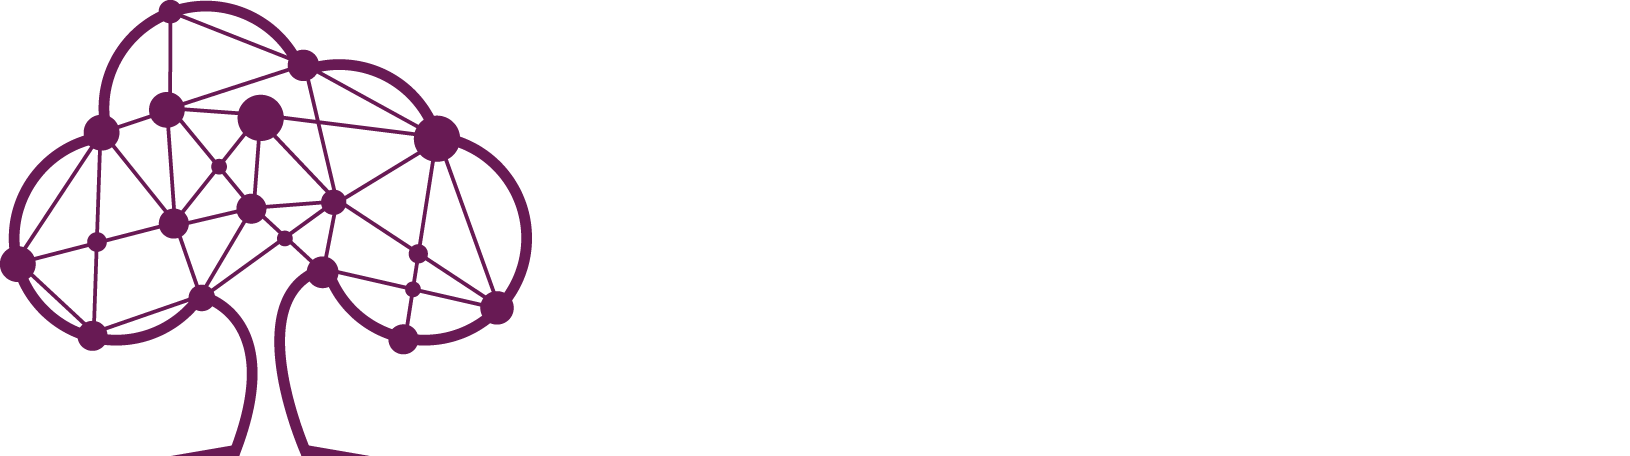 Dareto GmbH - Industrial Internet of Things